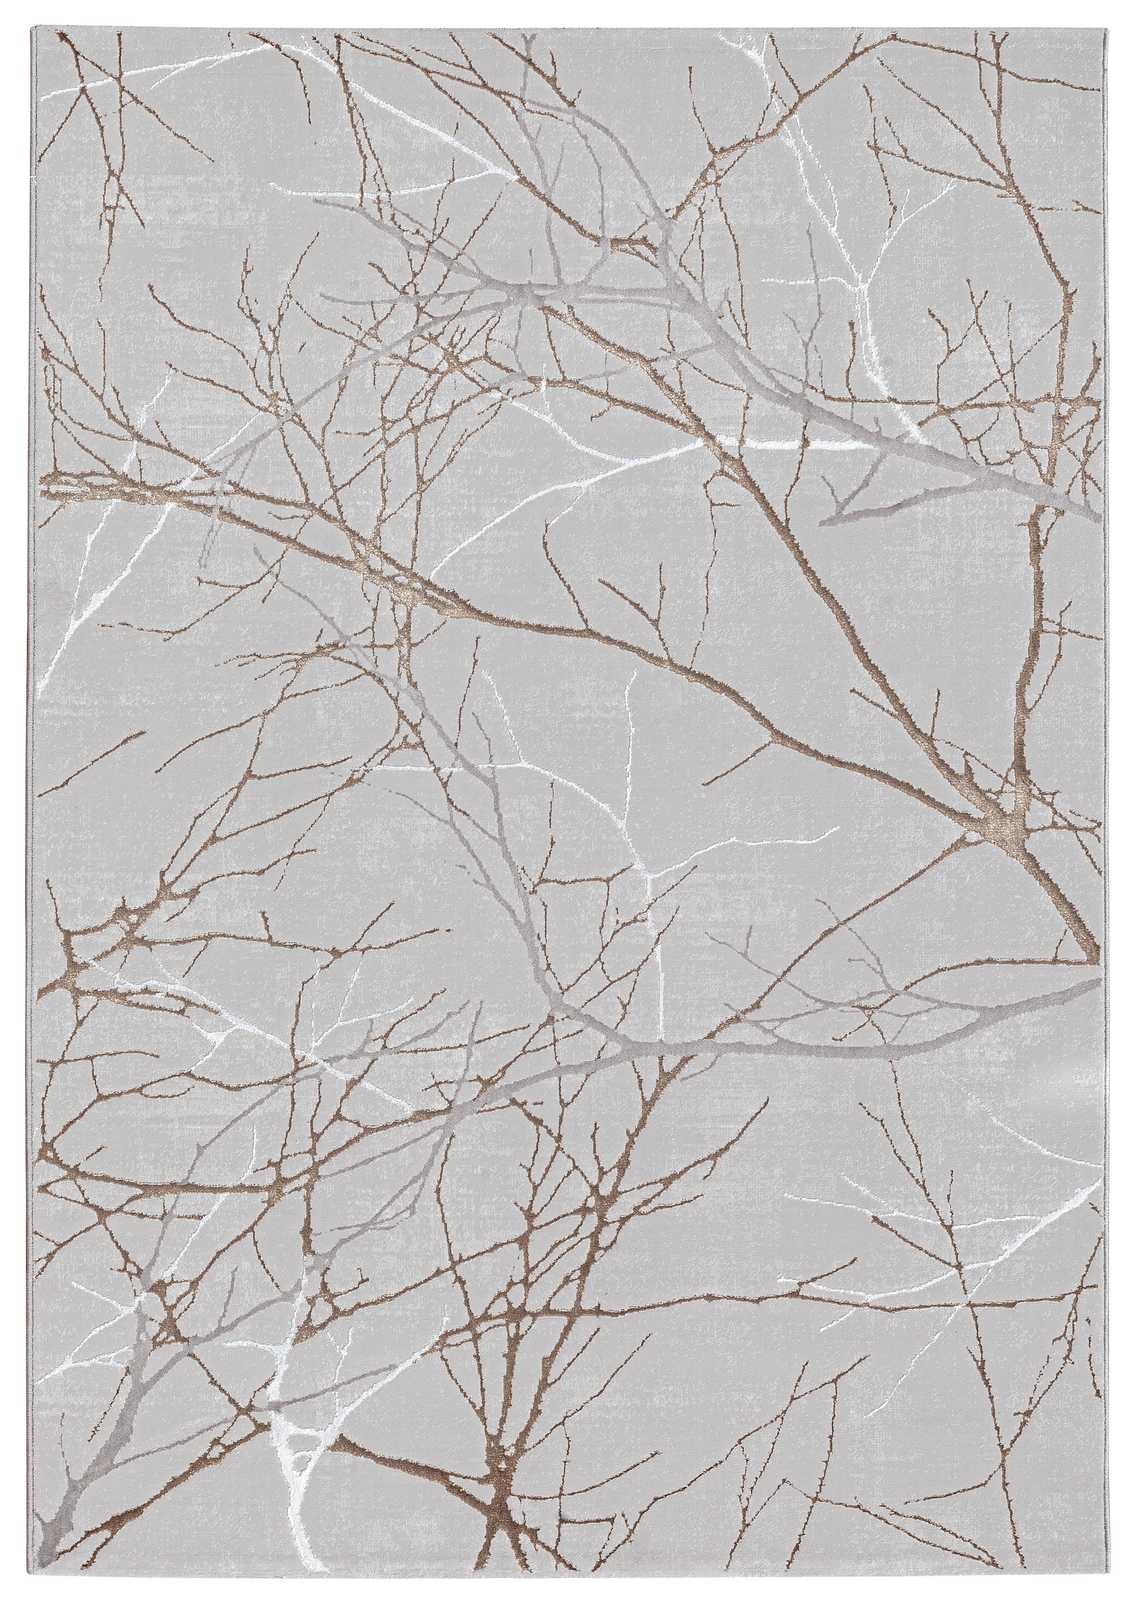             Bemusterter Hochflor Teppich in Grau – 290 x 200 cm
        